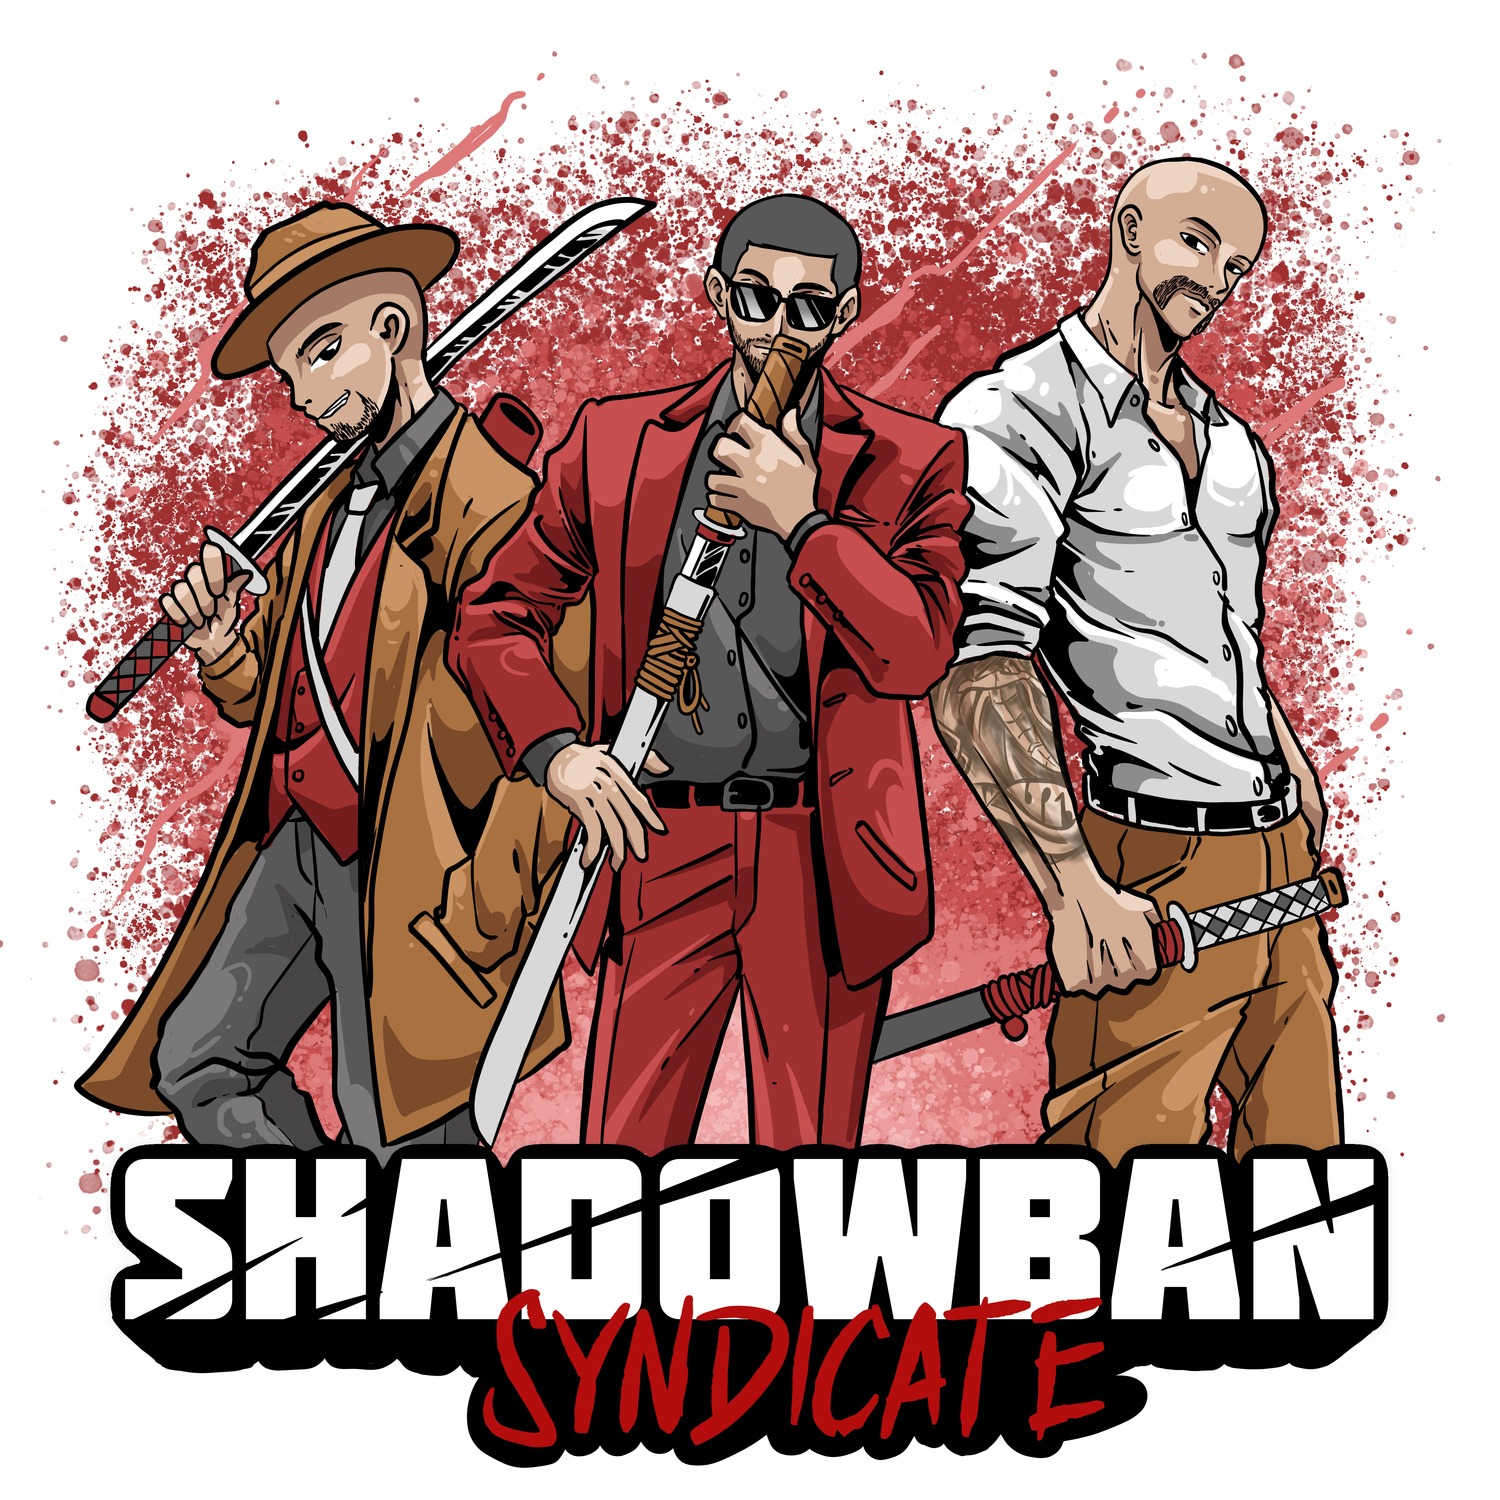 Shadowban Syndicate #8: 